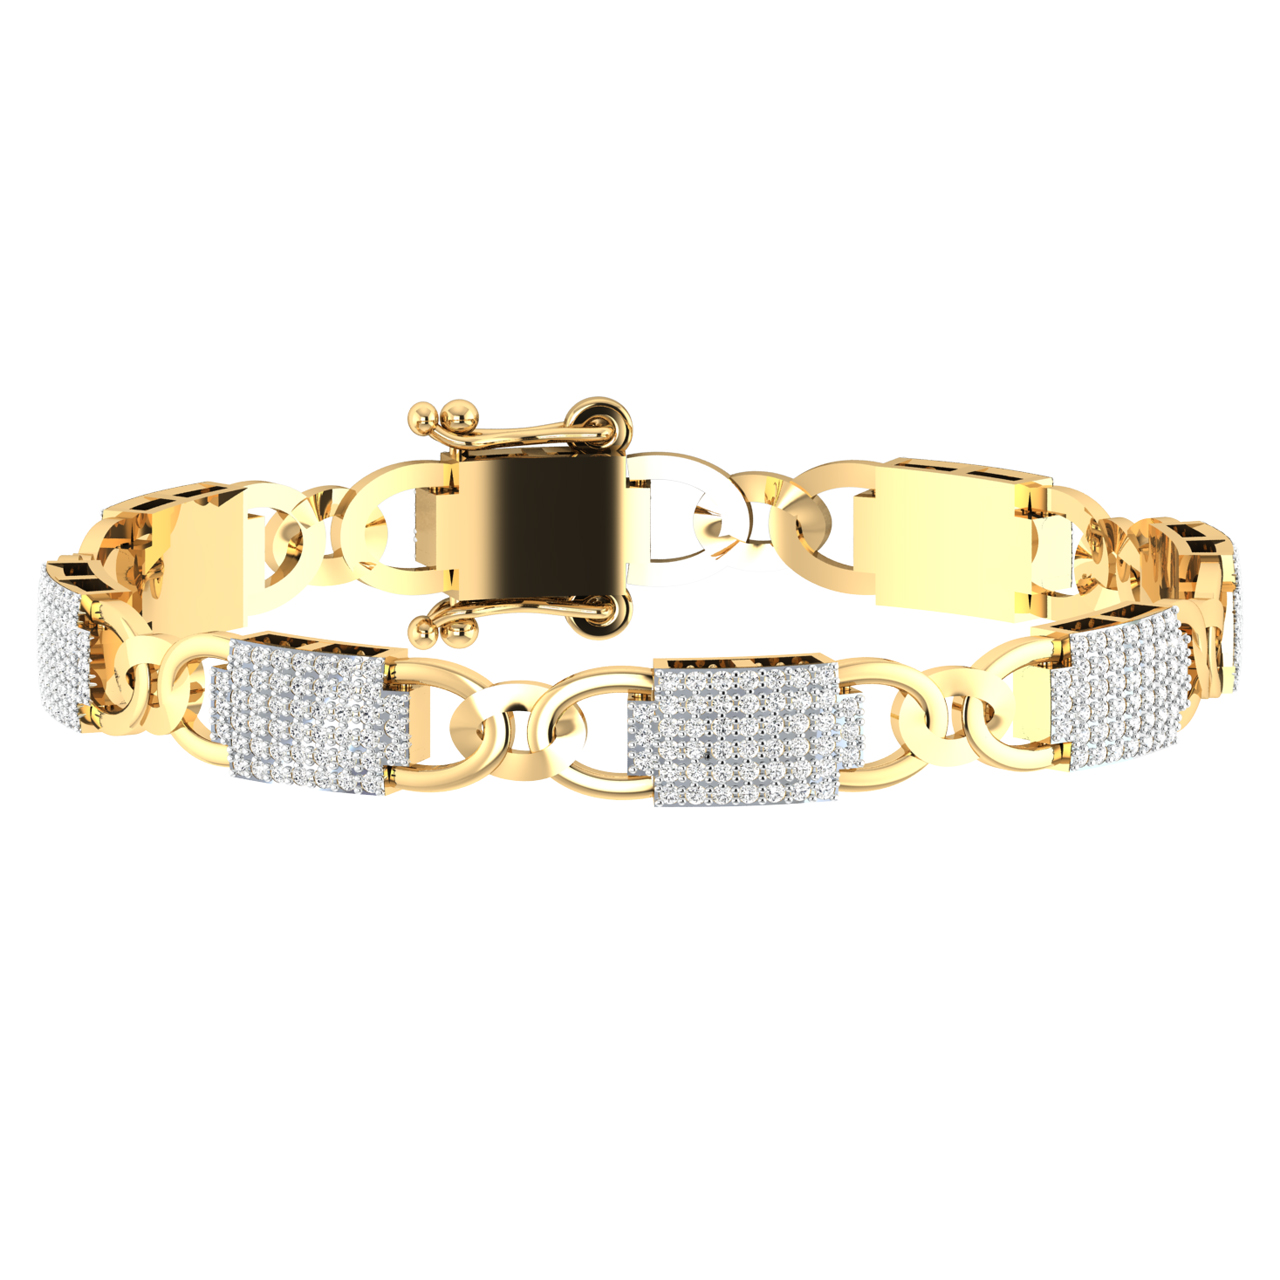 Buy Gold and Diamond Jewellery at Jewelegance.com – Online Jewellery Store  | Mens bracelet gold jewelry, Jewelry bracelets gold, Gold jewelry outfits